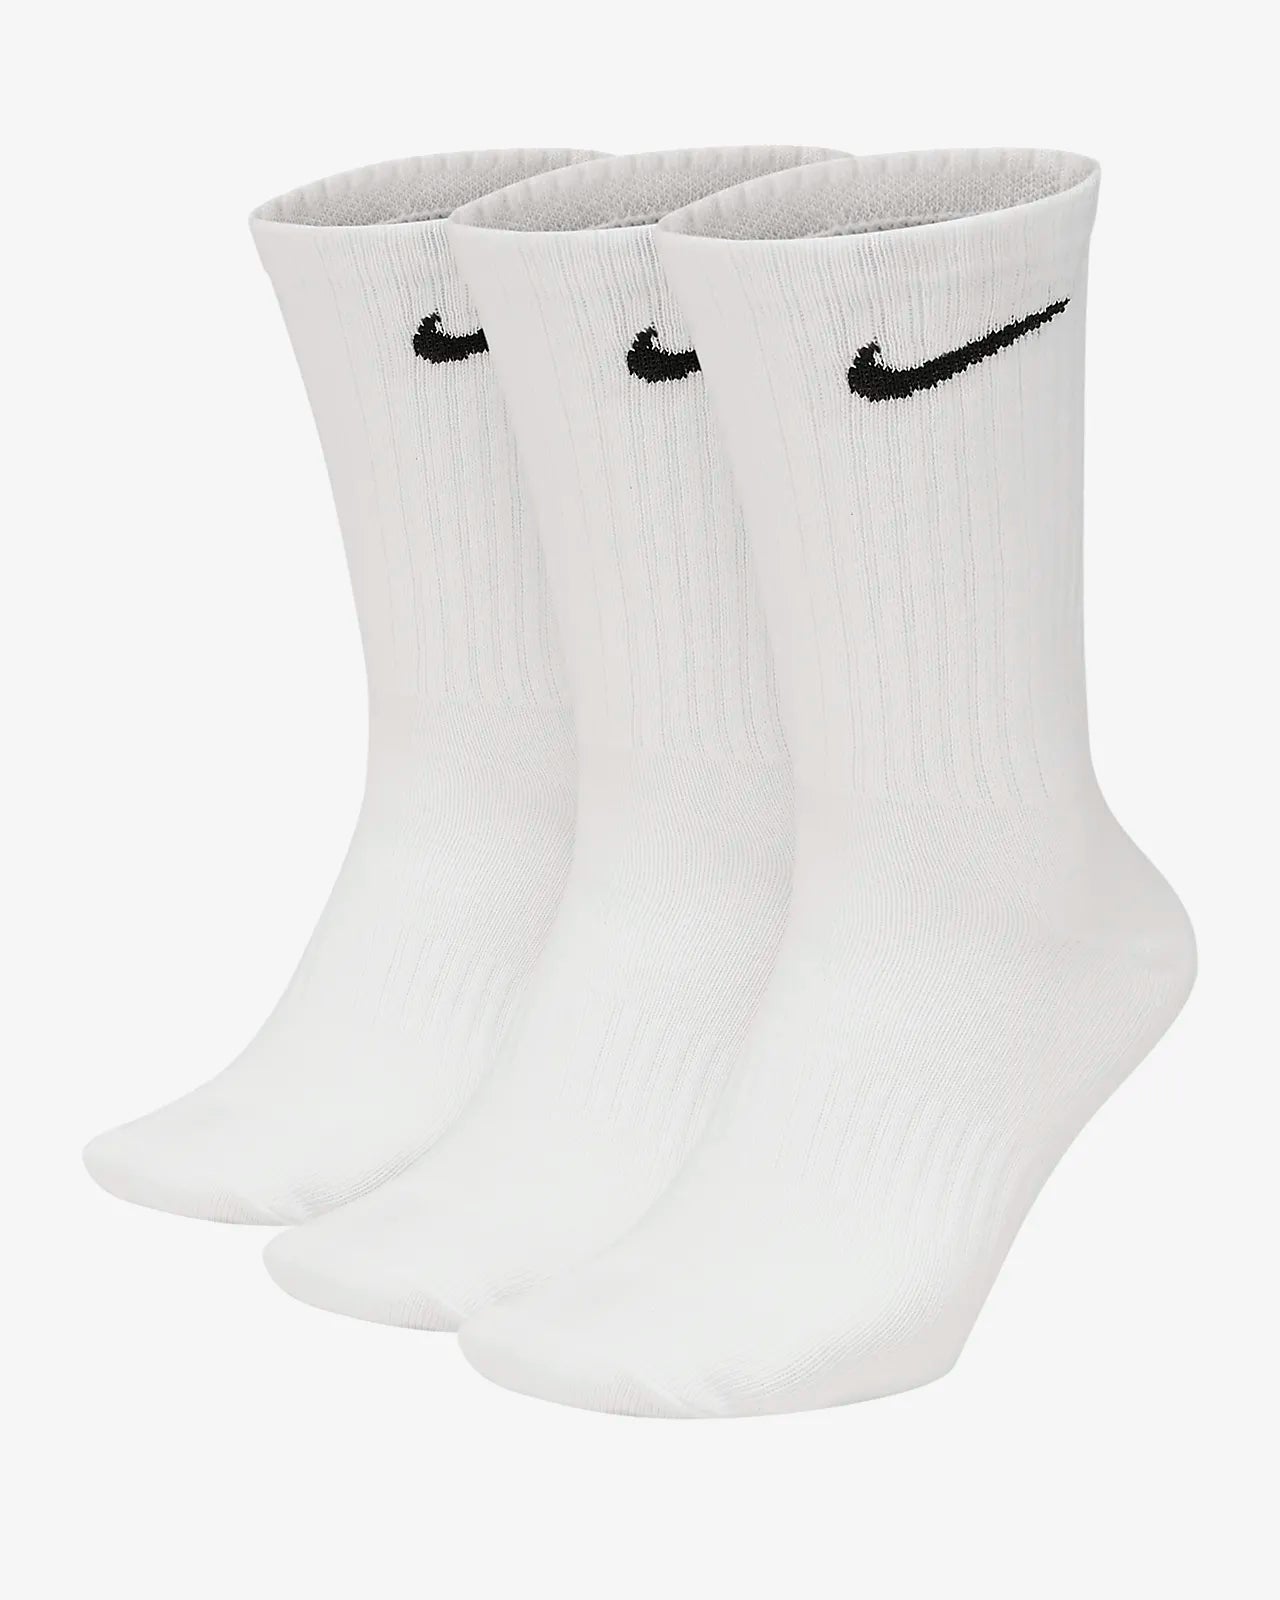 Nike Everyday Crew Socks